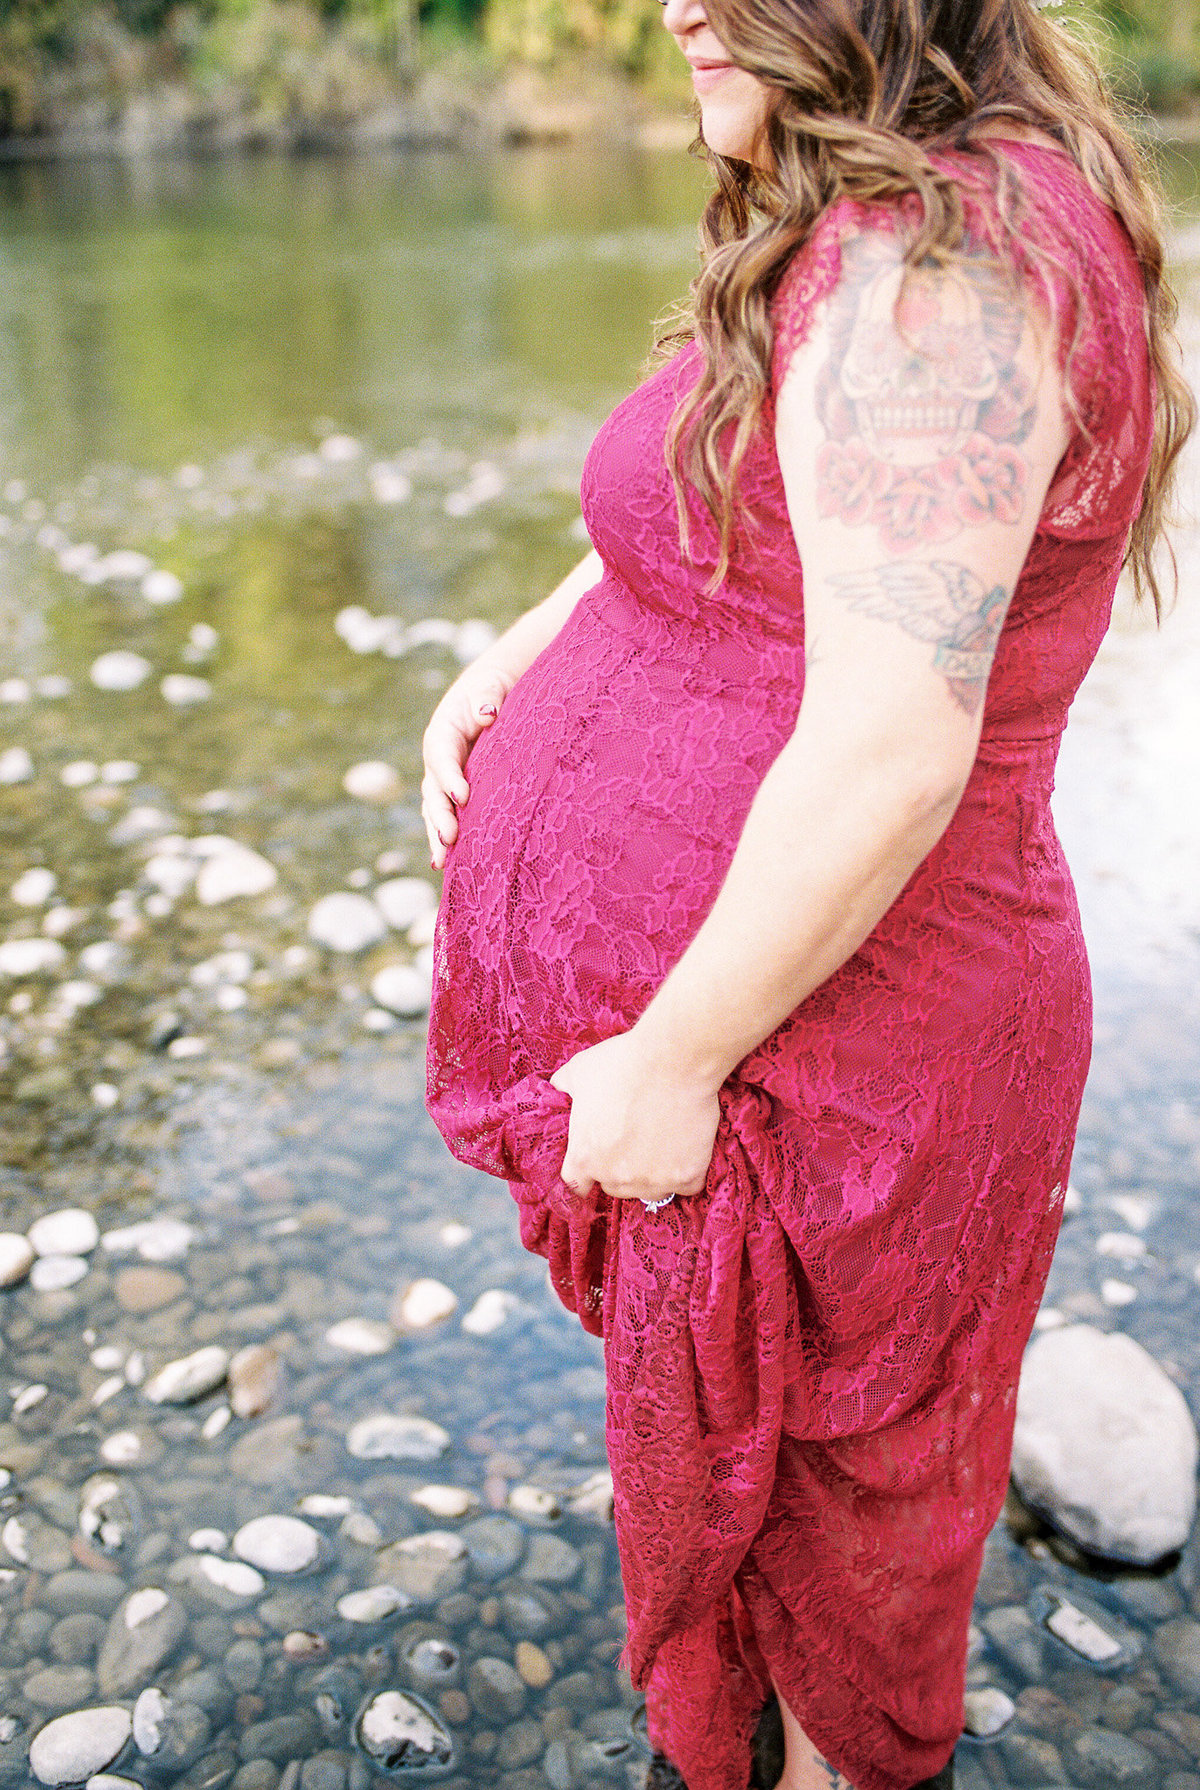 ArmitagePark_Maternity_GeorgiaRuthPhotography-17